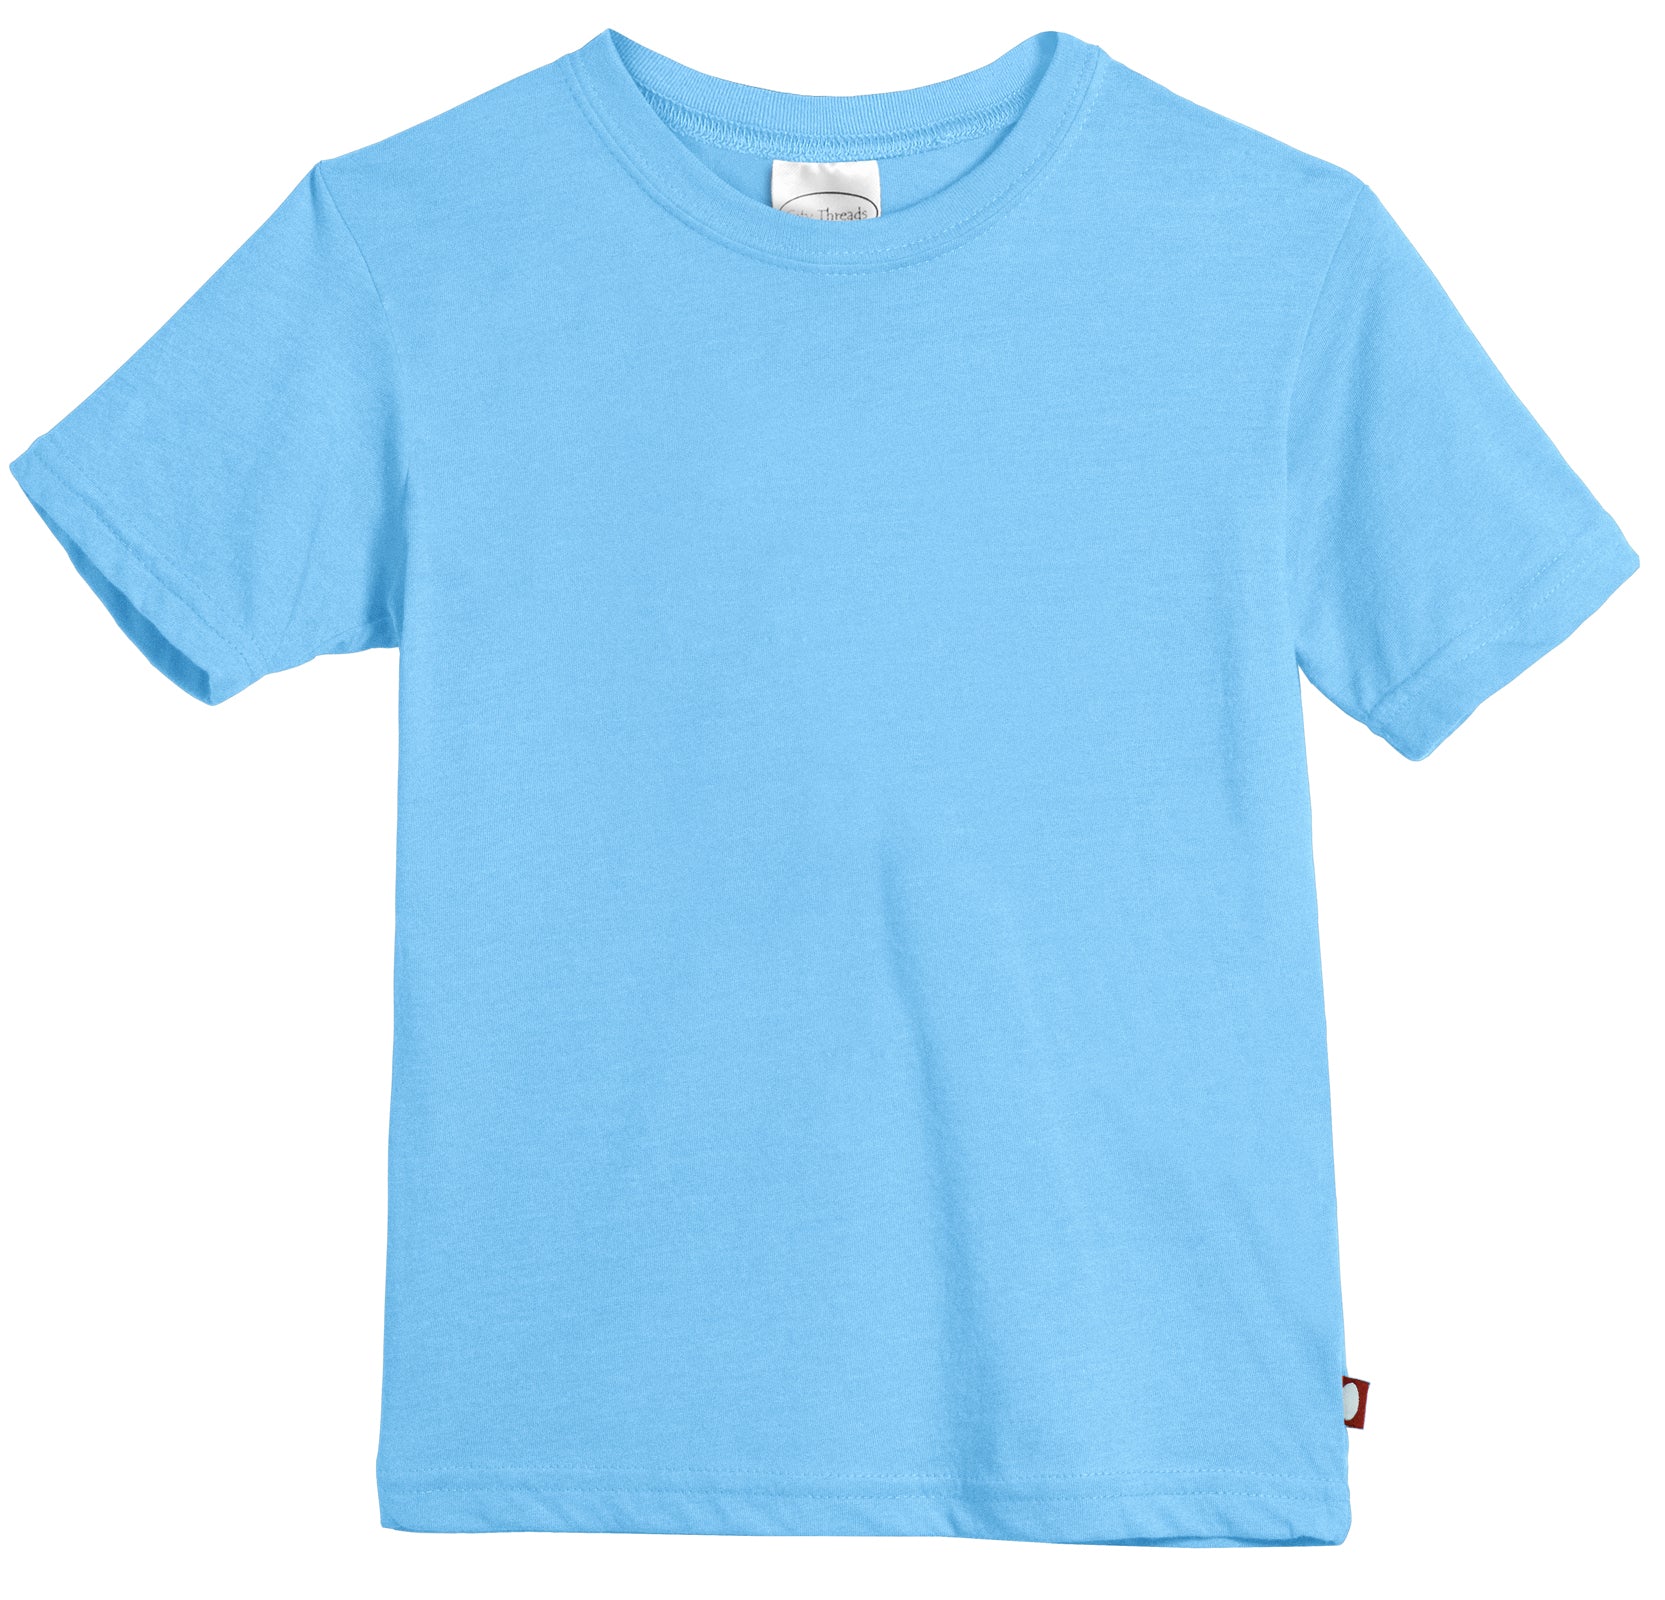 Jus Cubs Boys Full Sleeves Checks Shirt 100% Cotton Soft Feel BioWash - Blue